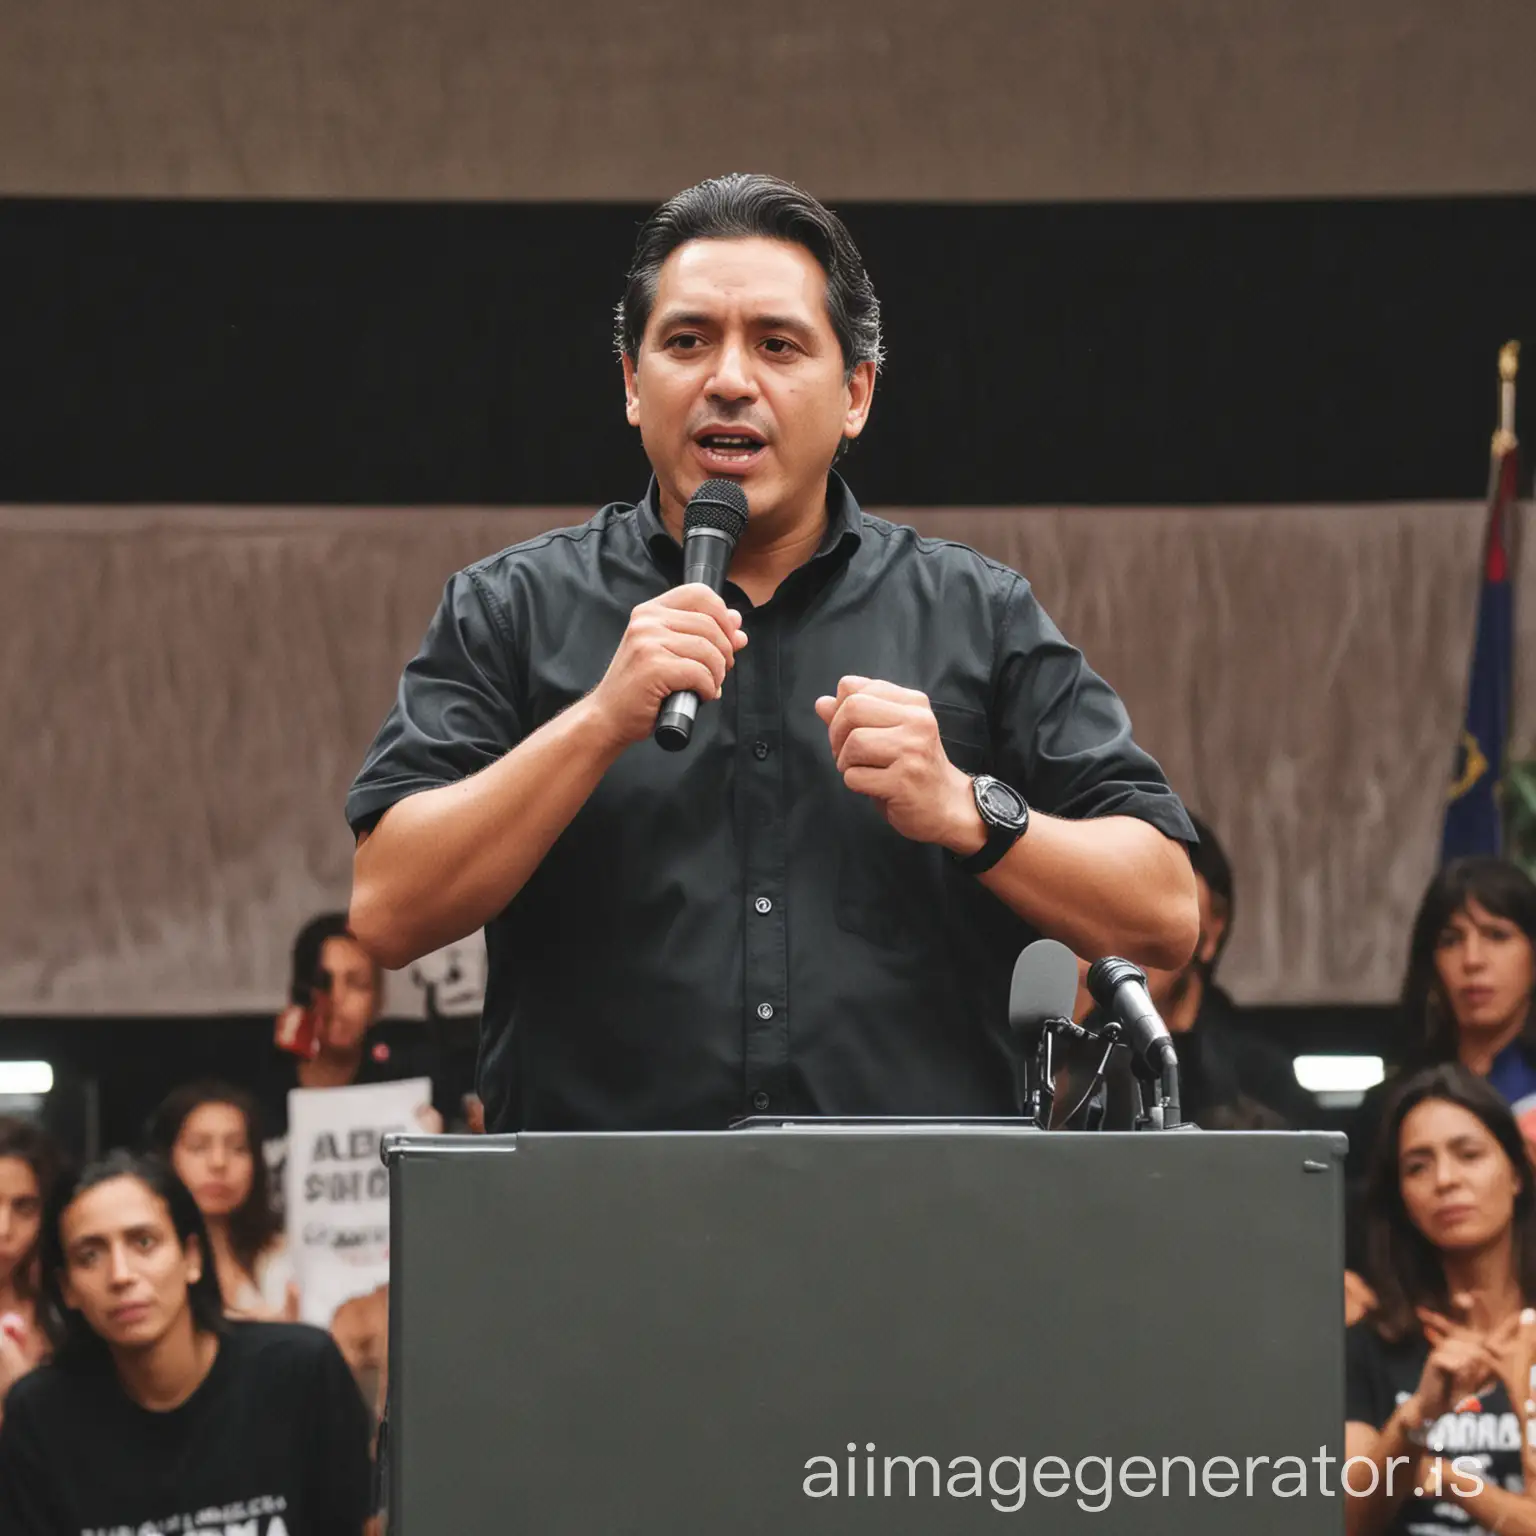 Miraflores-Governor-Alex-Santos-Speaking-at-Rally